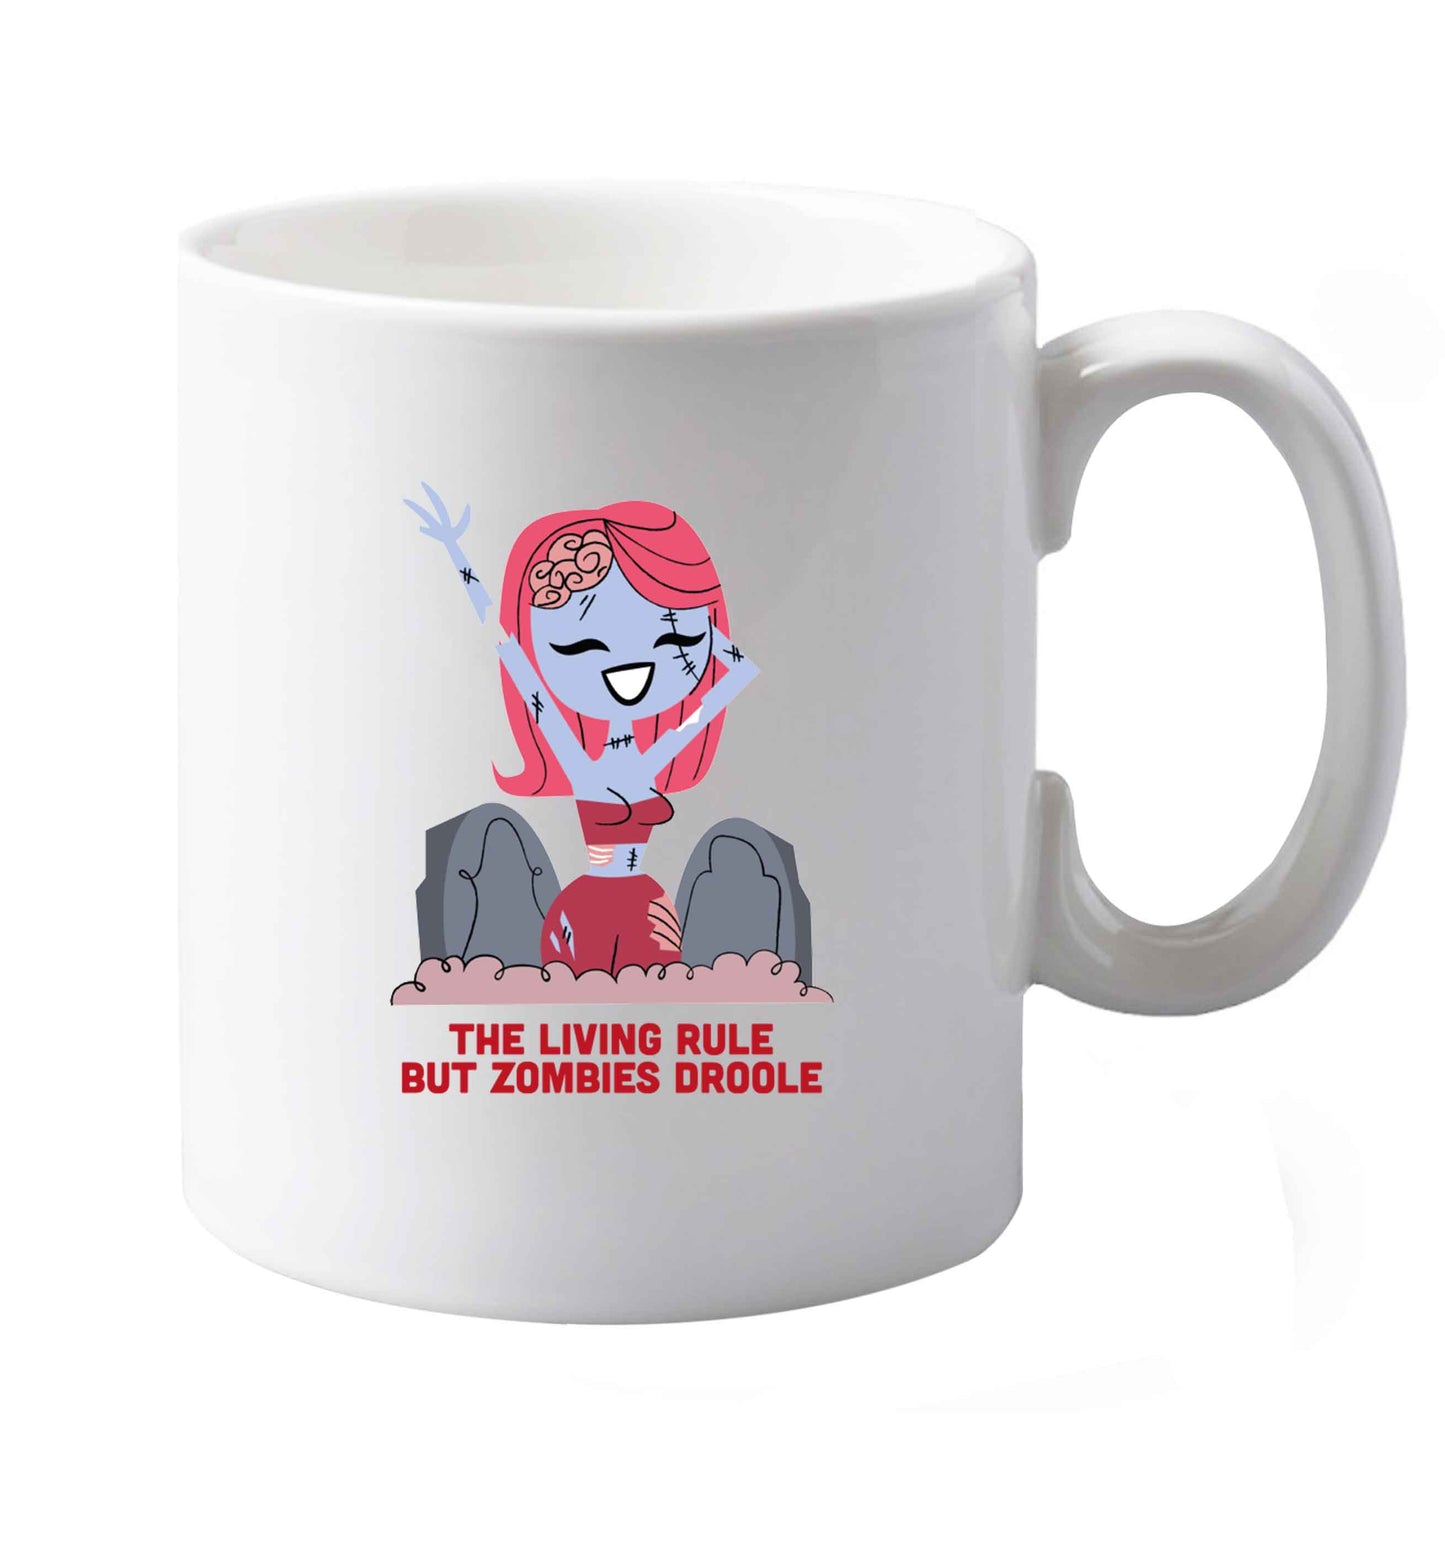 10 oz Living rule but zombies droole ceramic mug both sides